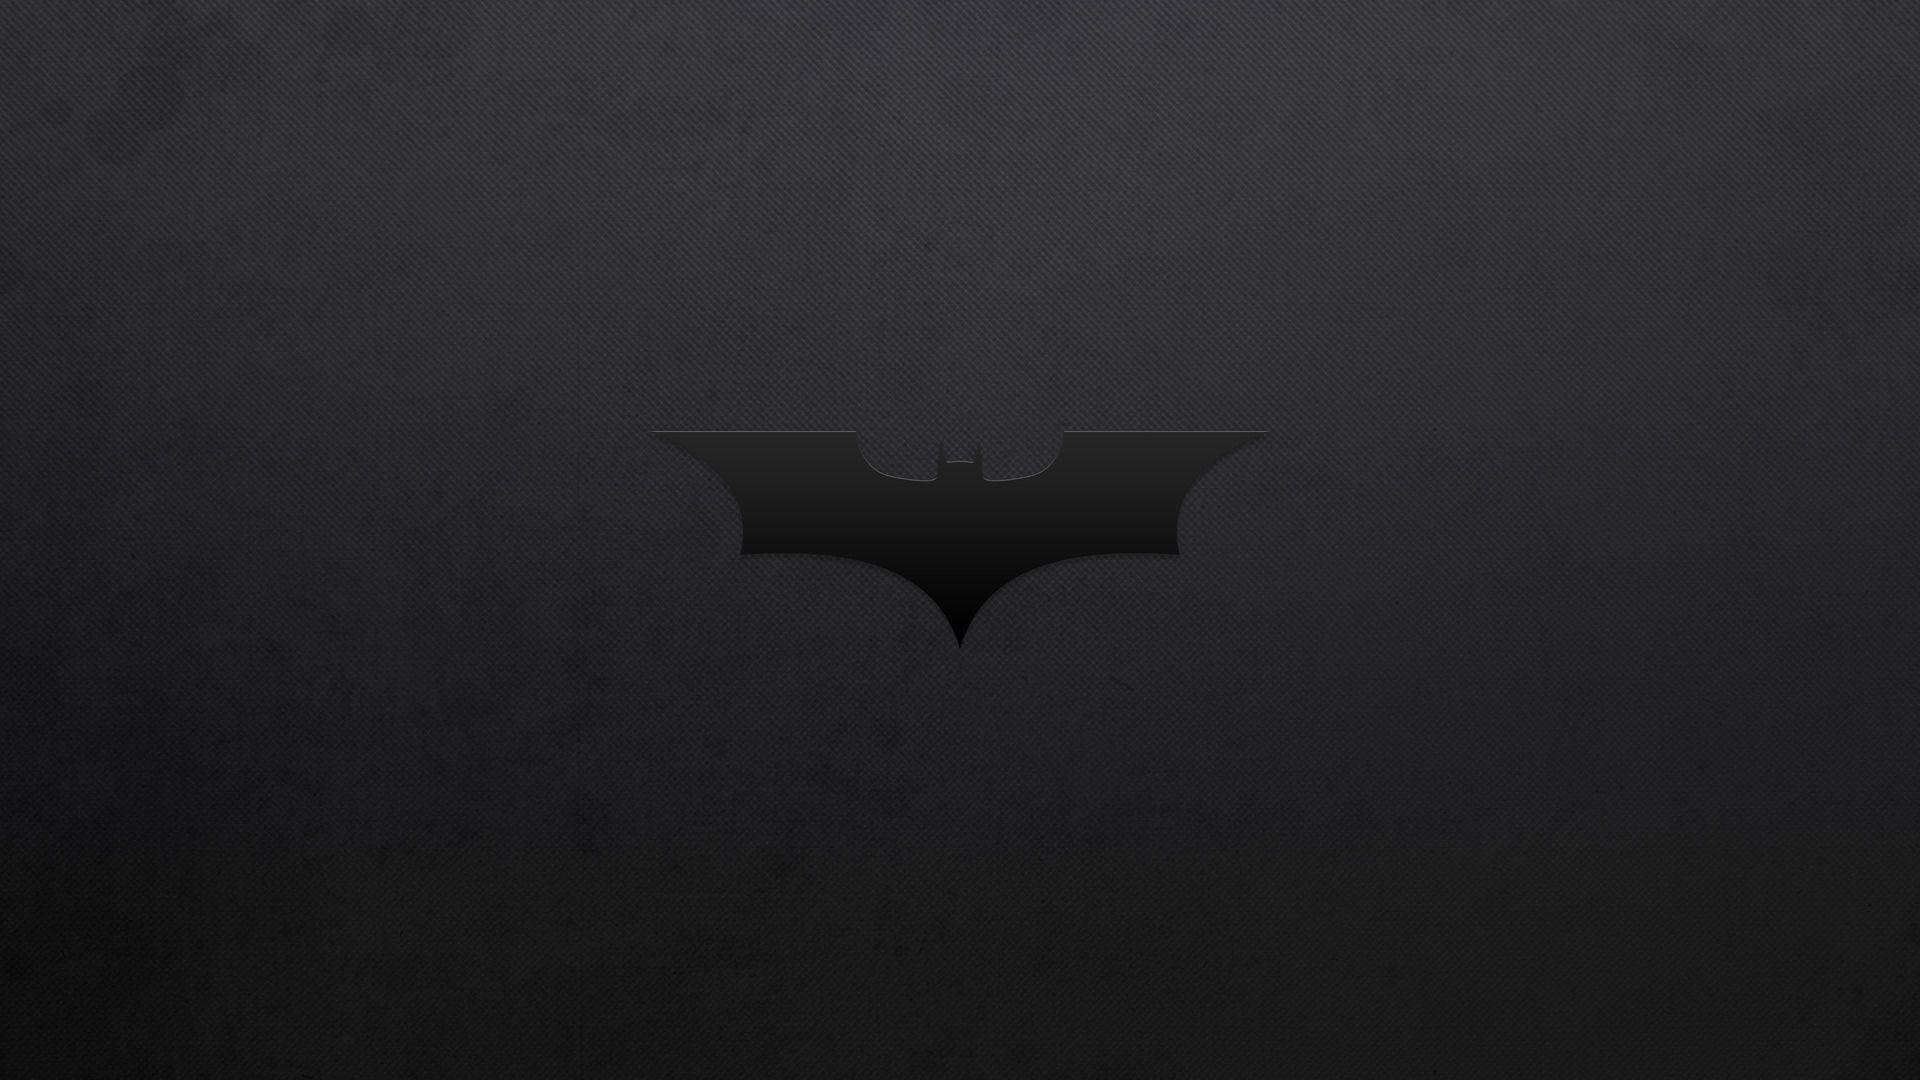 Batman Logo wallpaper For Free Download (HD 1080p)